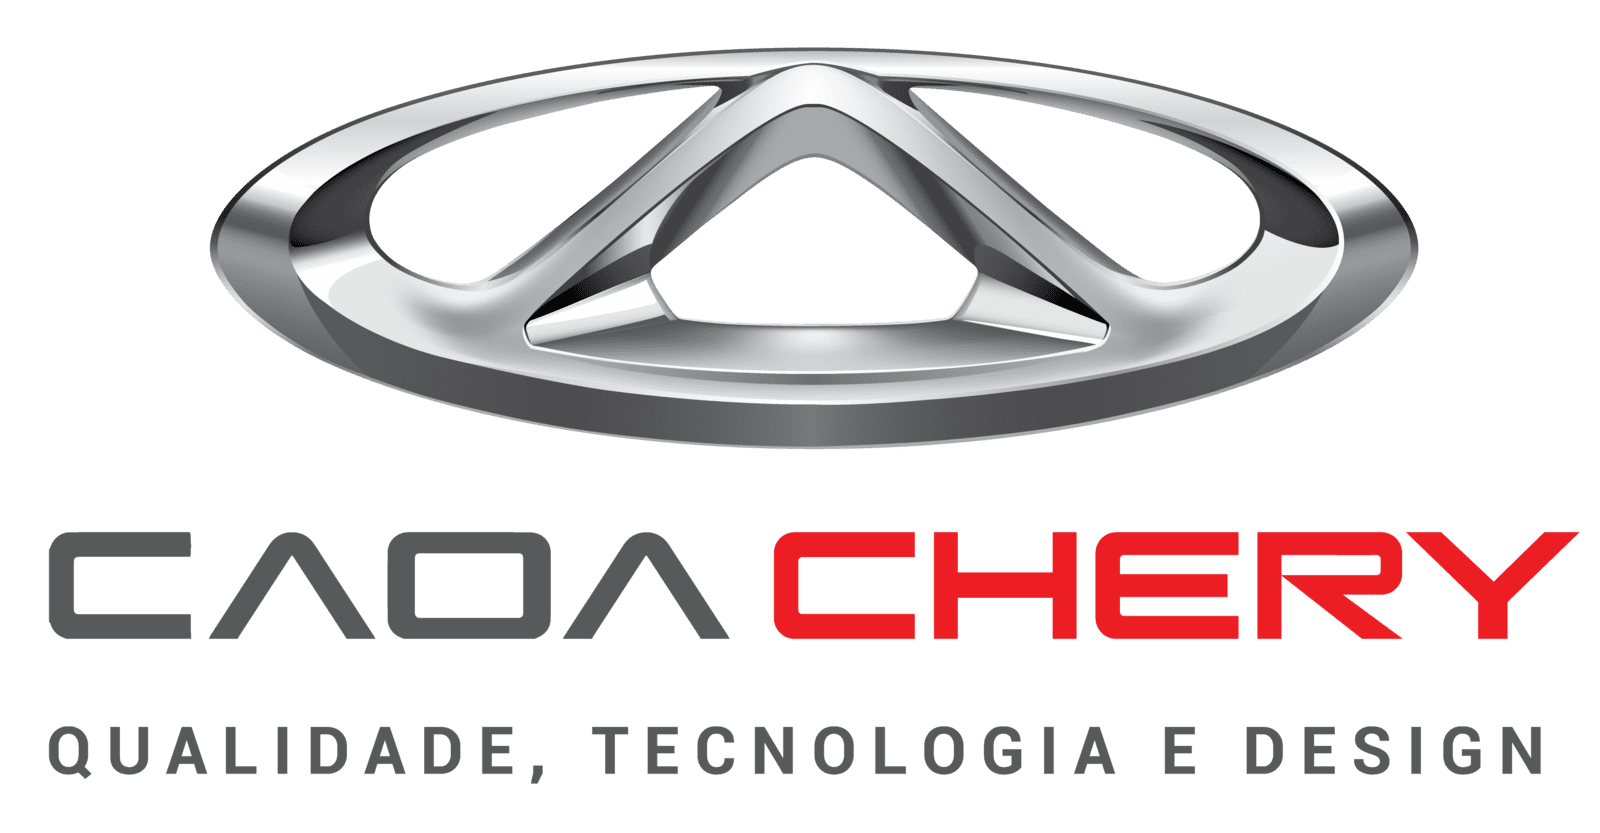 caoa-chery-logo